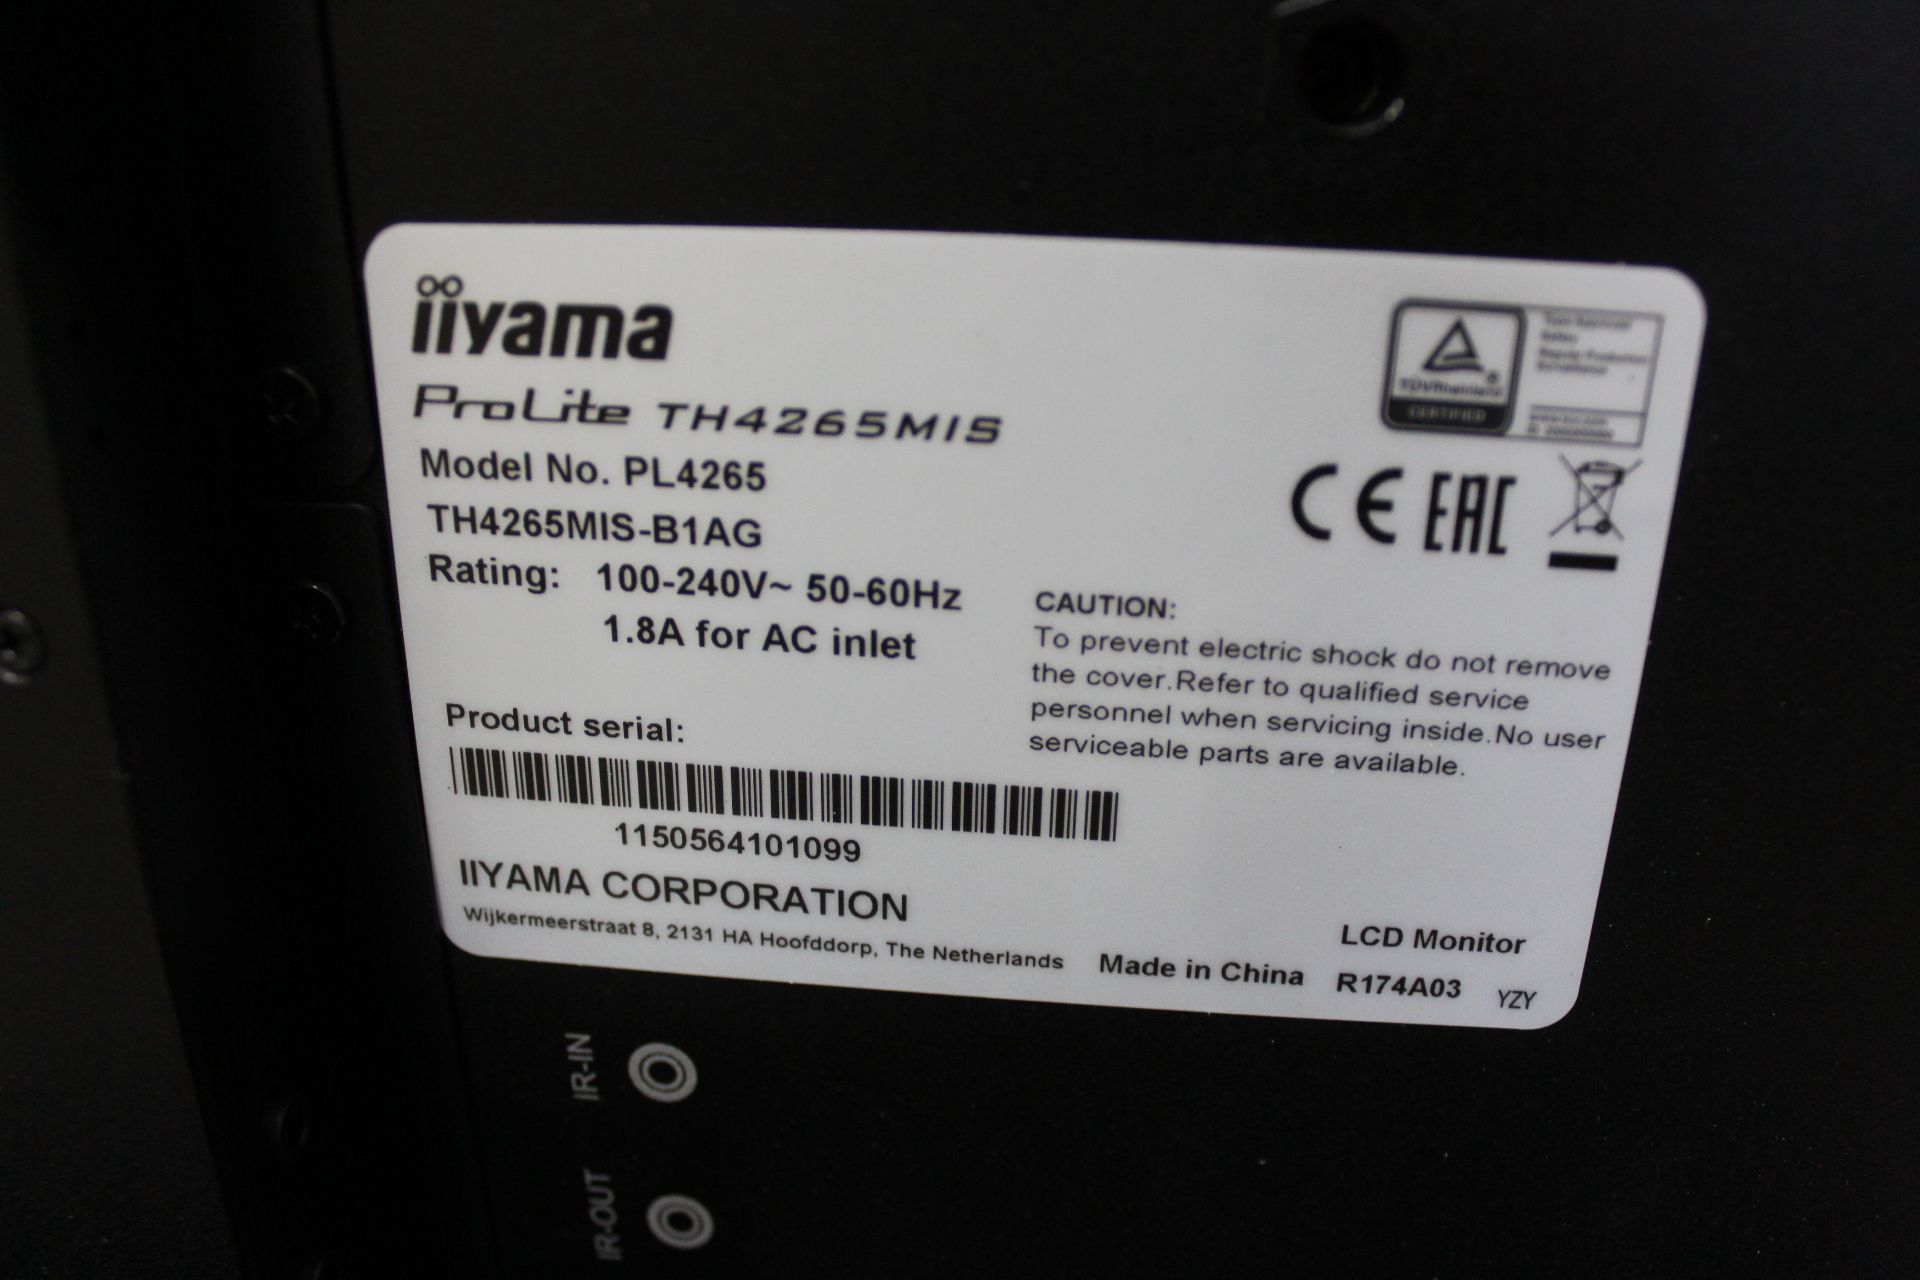 2x Iiyama ProLite TH4265MIS-B1AG 42" LCD touchscreens (20 Point) Serial No's. 1150564101099 & - Image 4 of 5